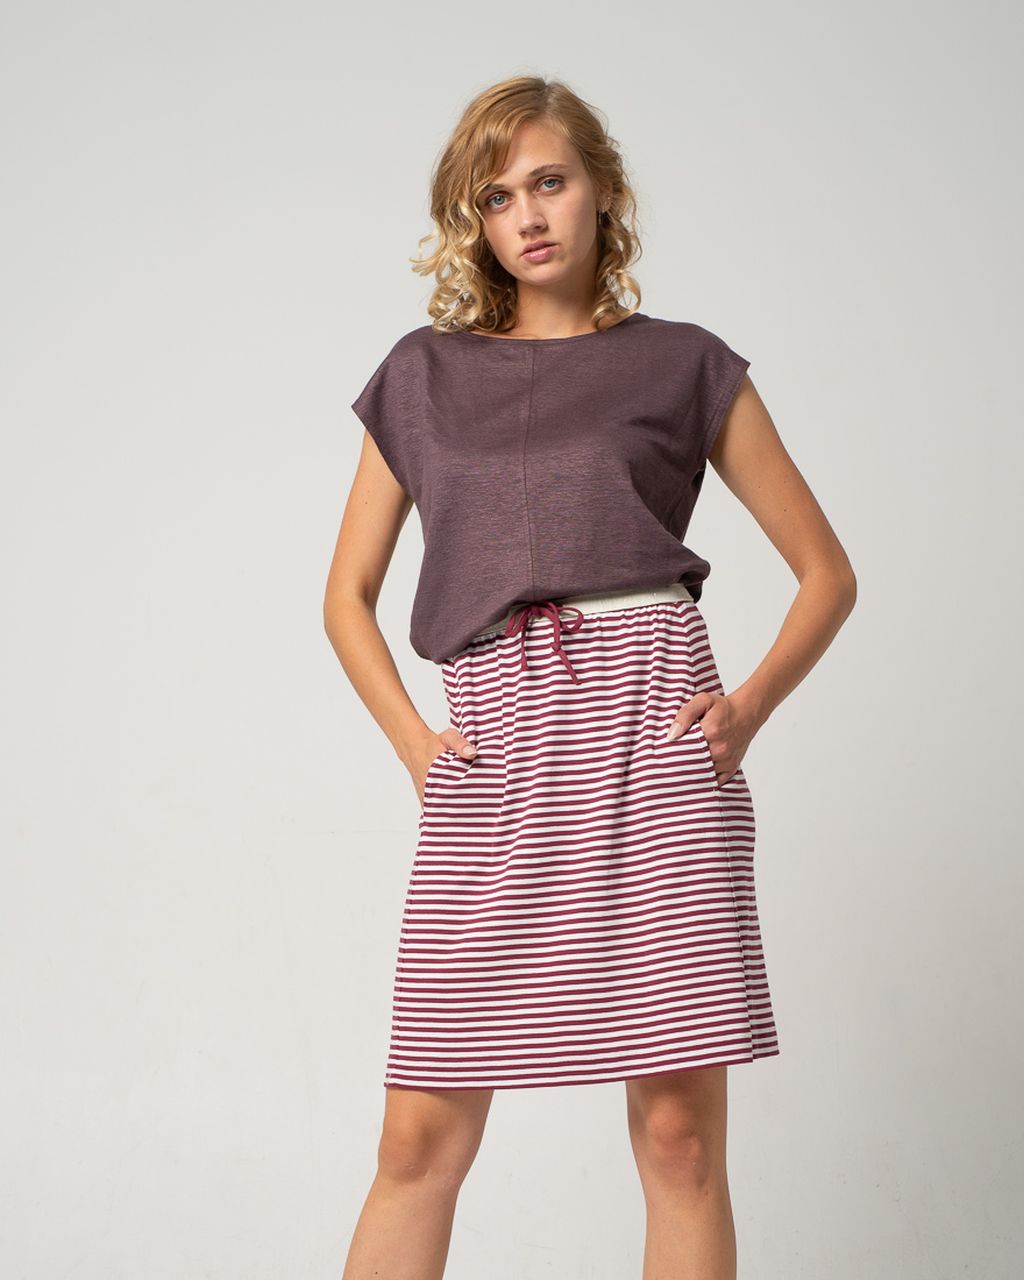 Breton Skirt Berry XL